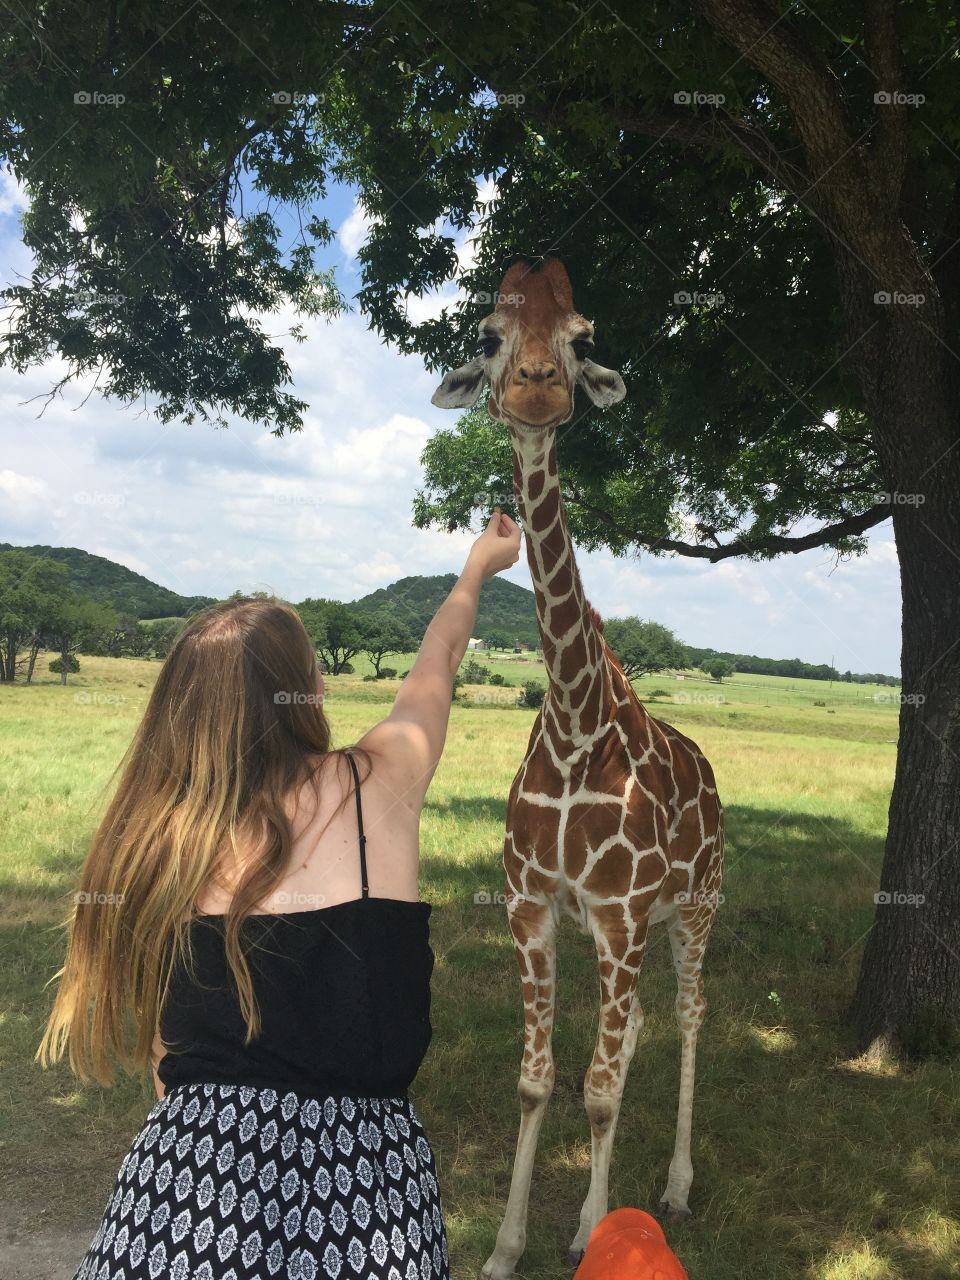 Baby giraffe ignoring offers of food 